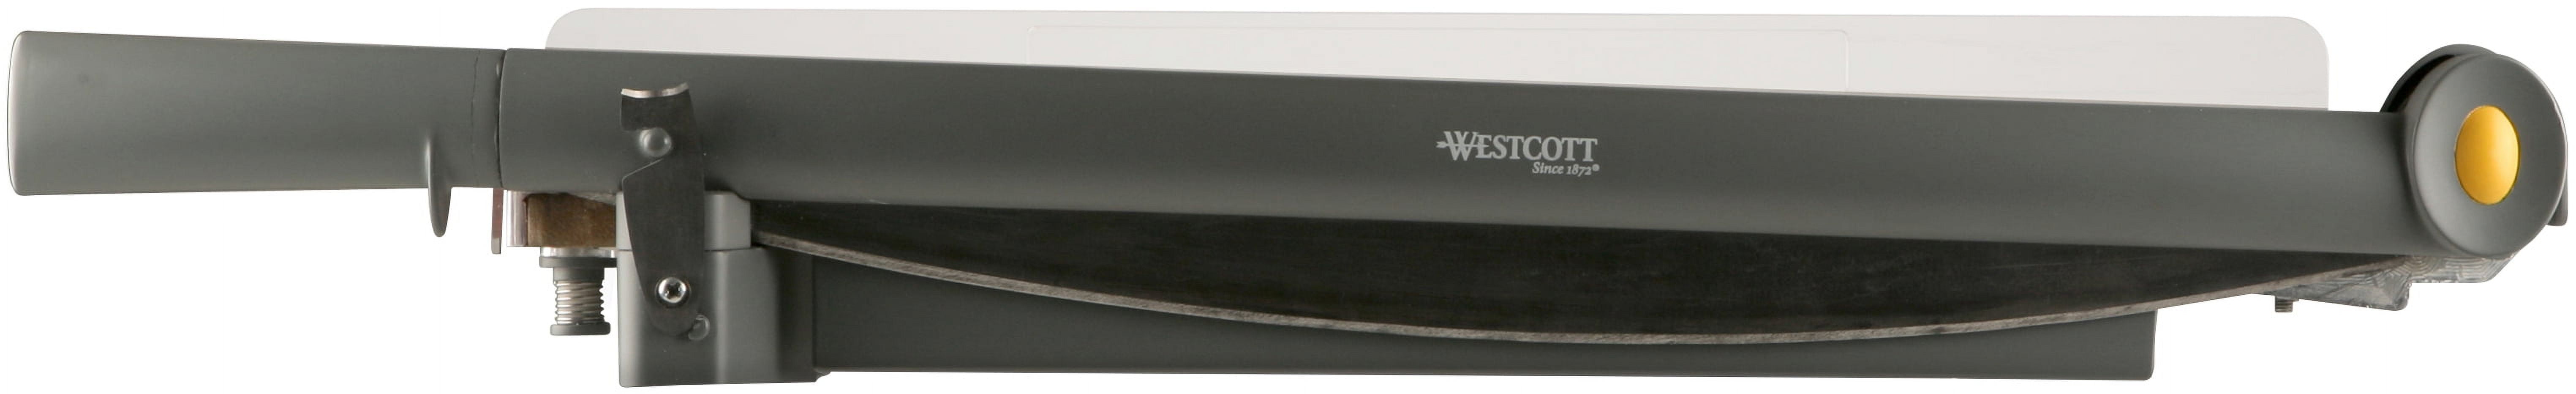 Westcott 15'' TrimAir Wood Guillotine Paper Cutter & Paper Trimmer, 30